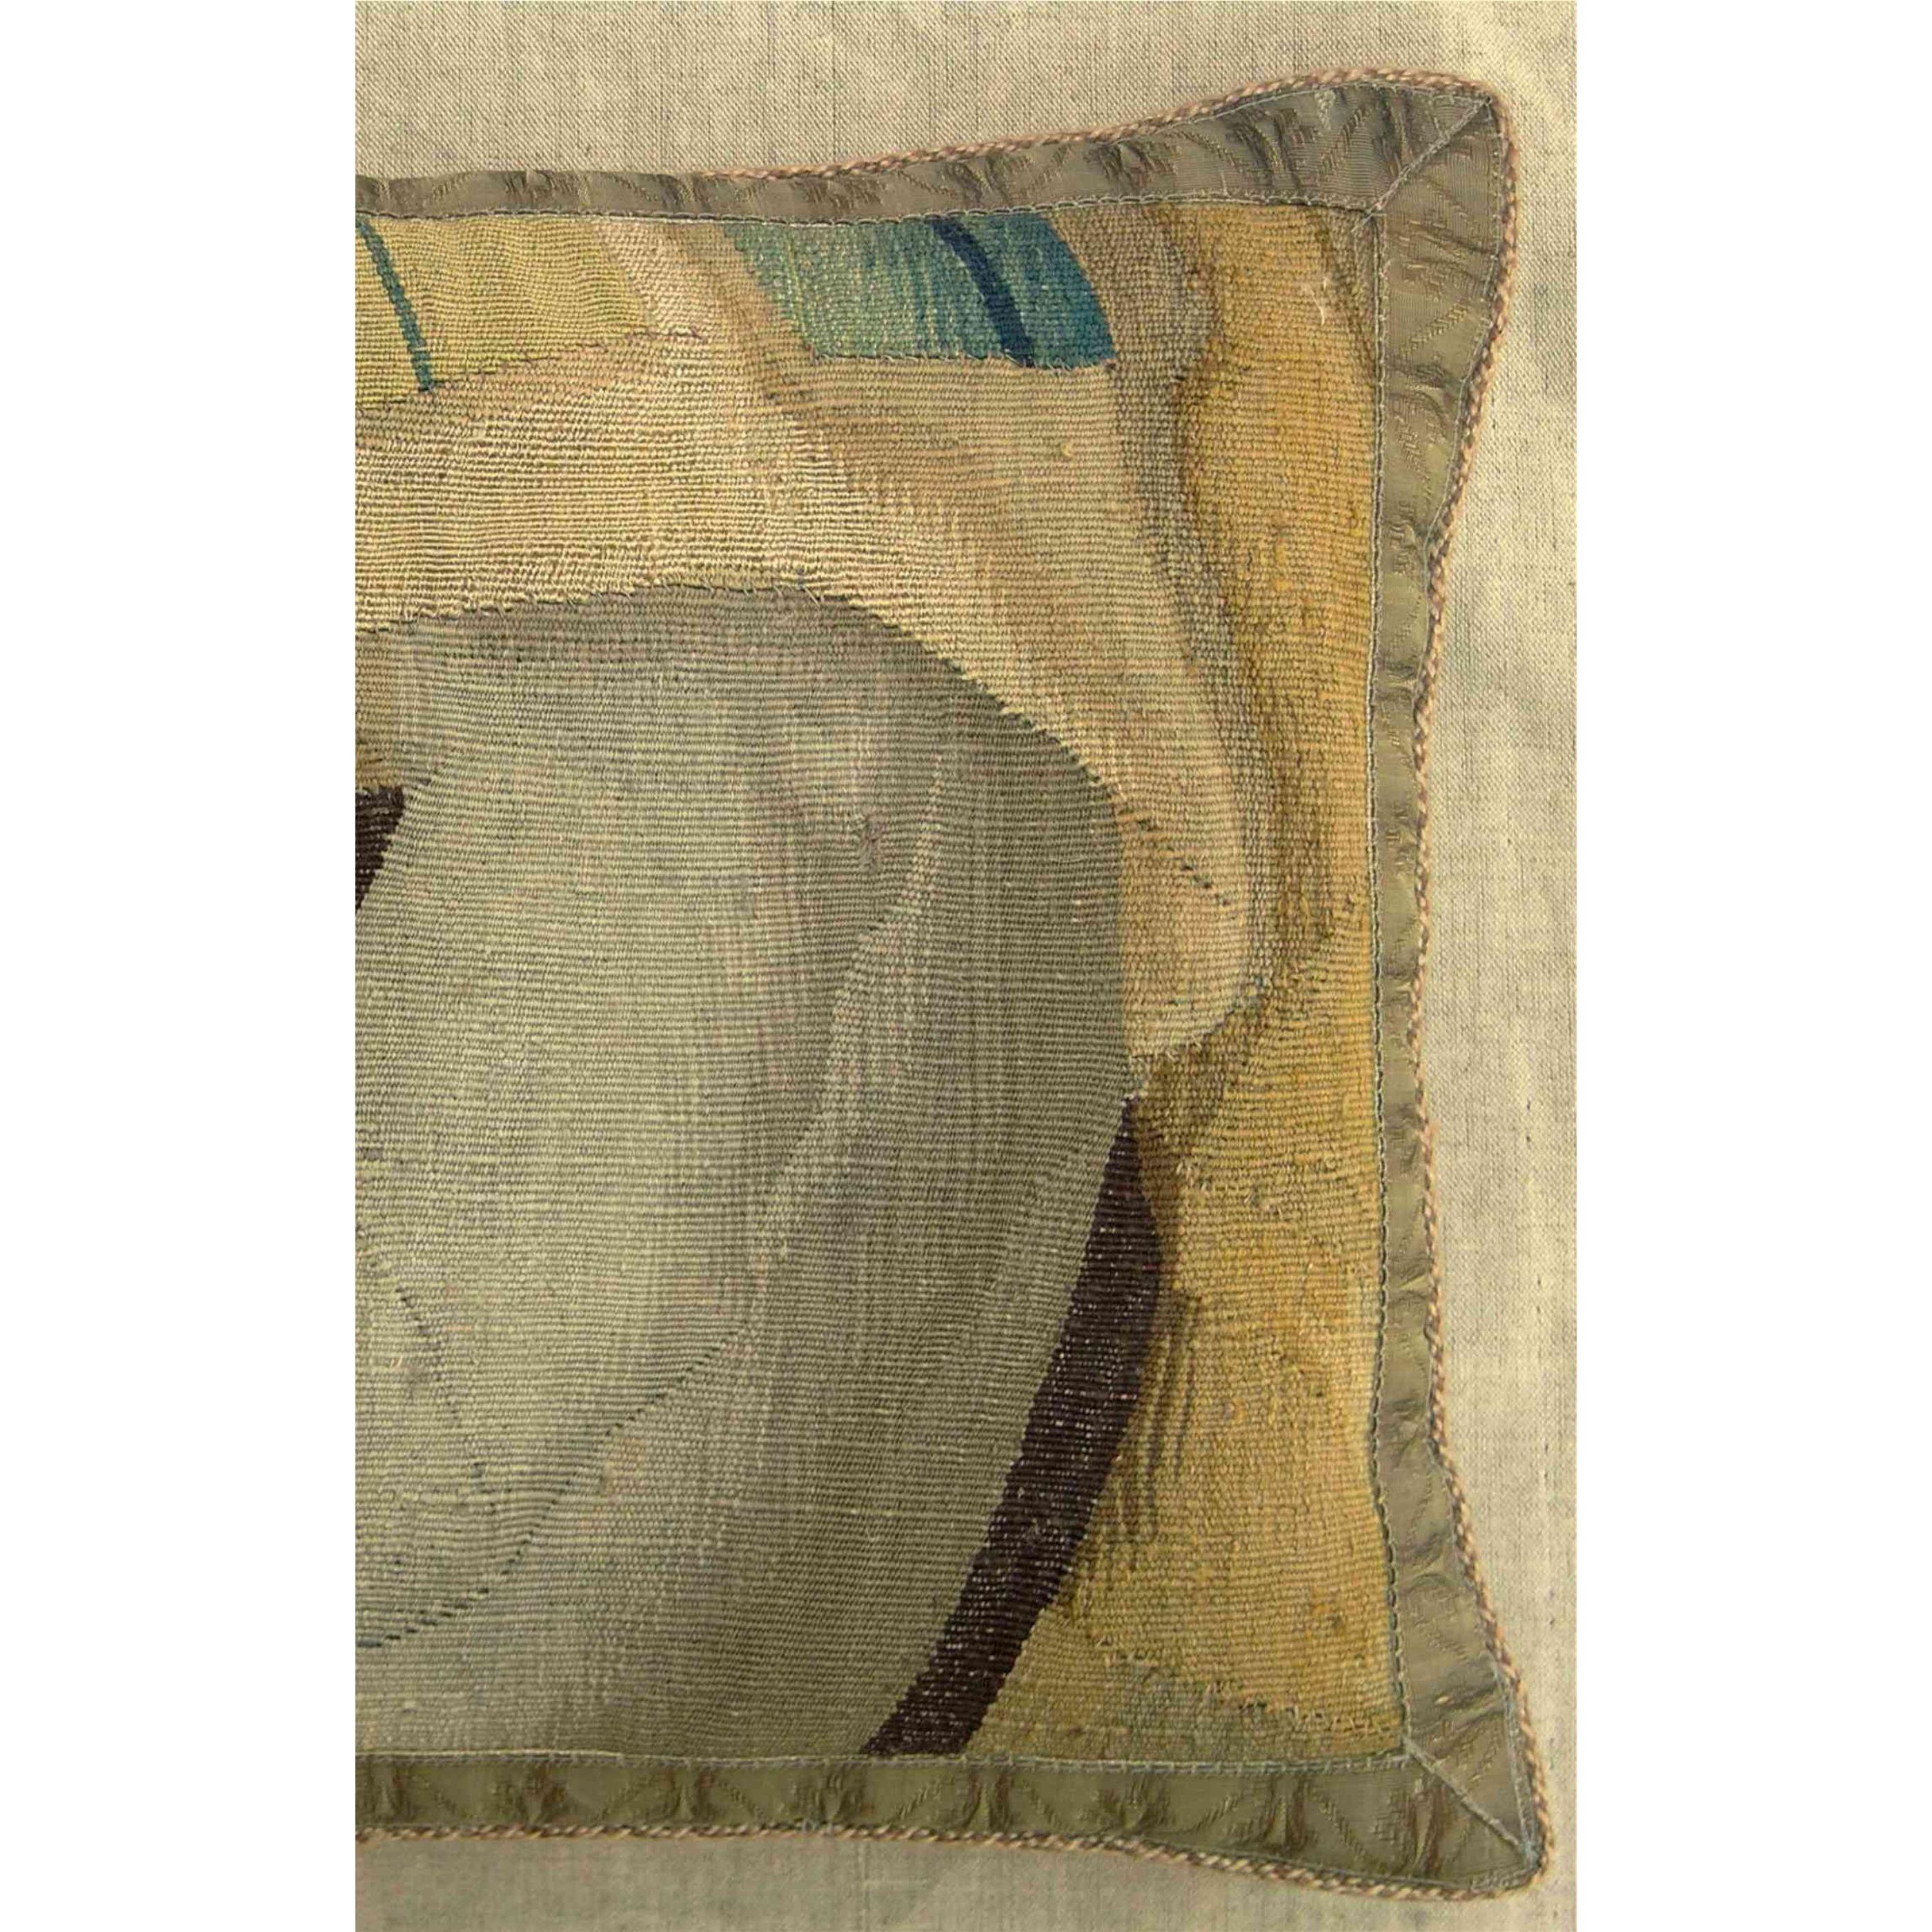 Ca. 1660 Antique Flemish Tapestry Pillow
